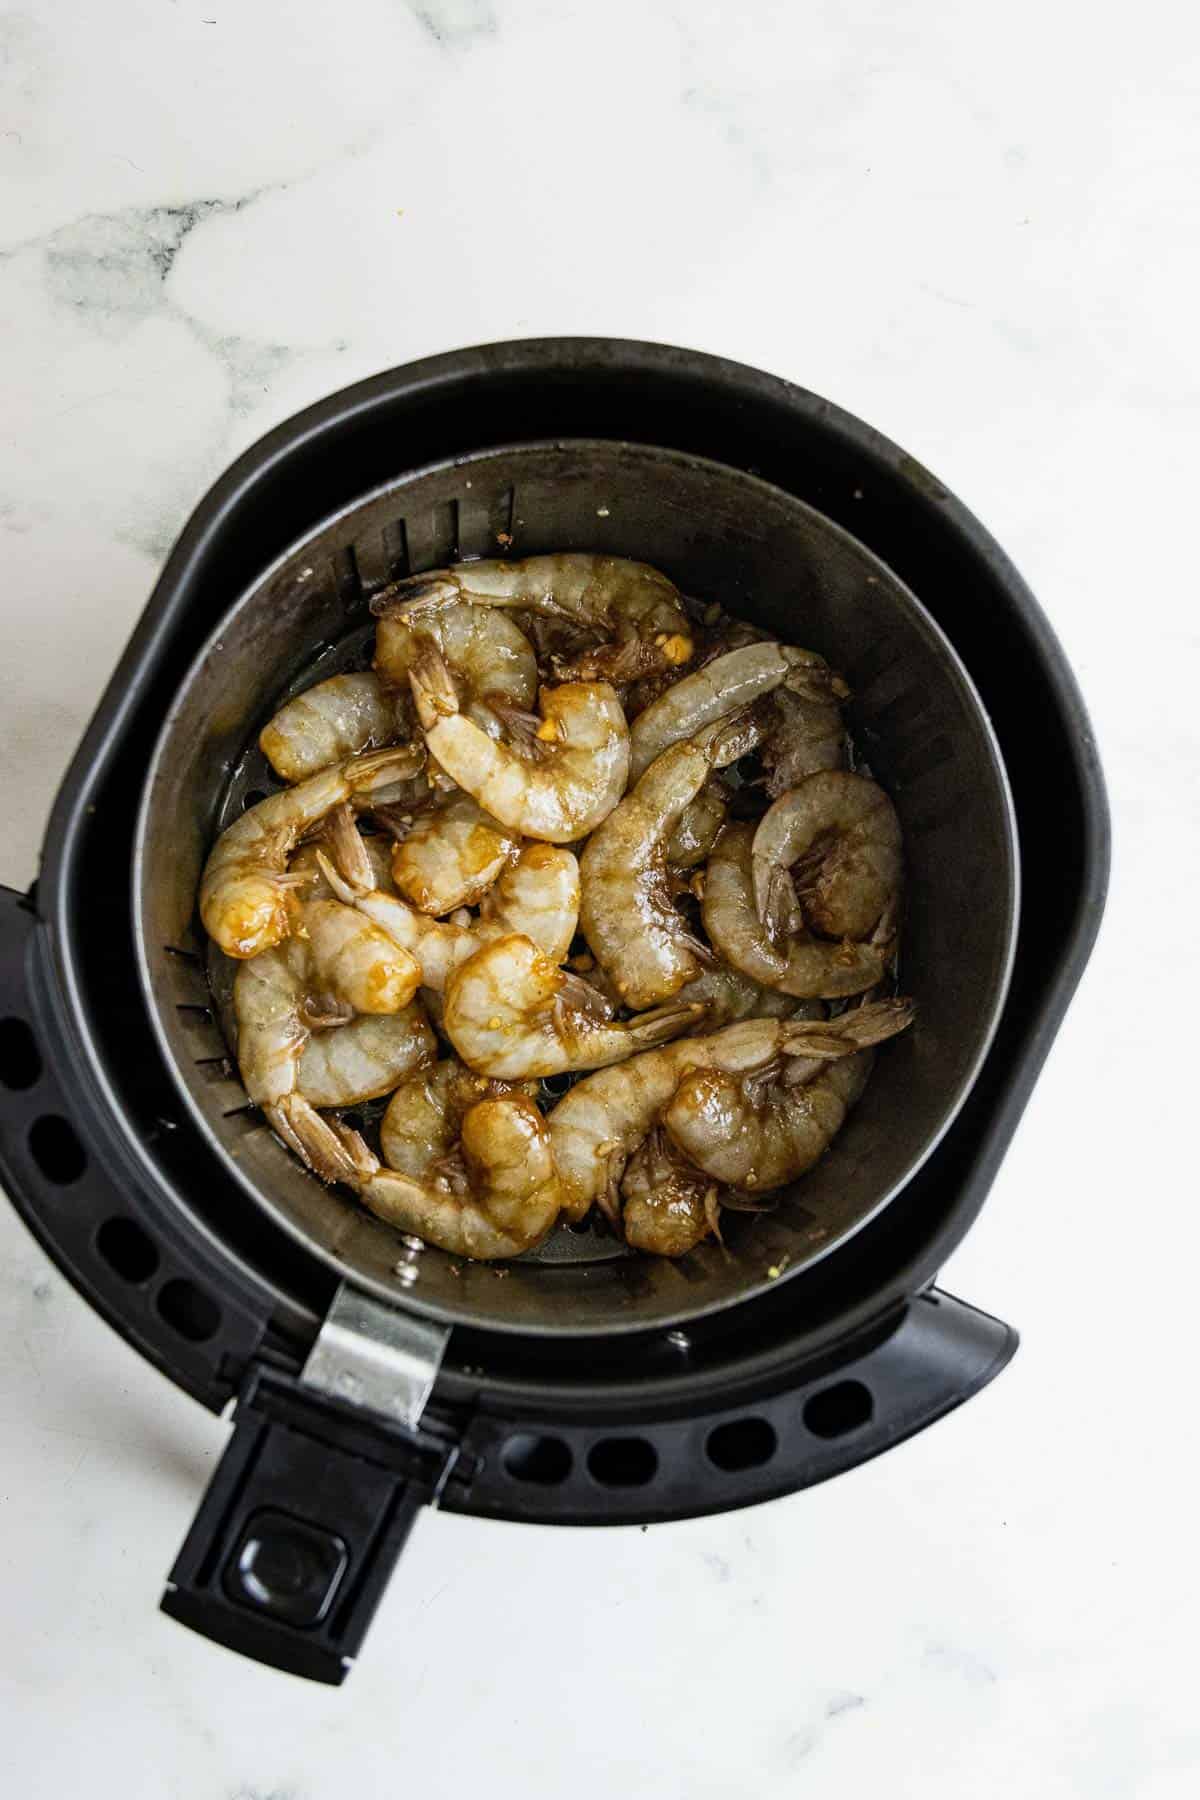 Raw shrimp in the air fryer basket.